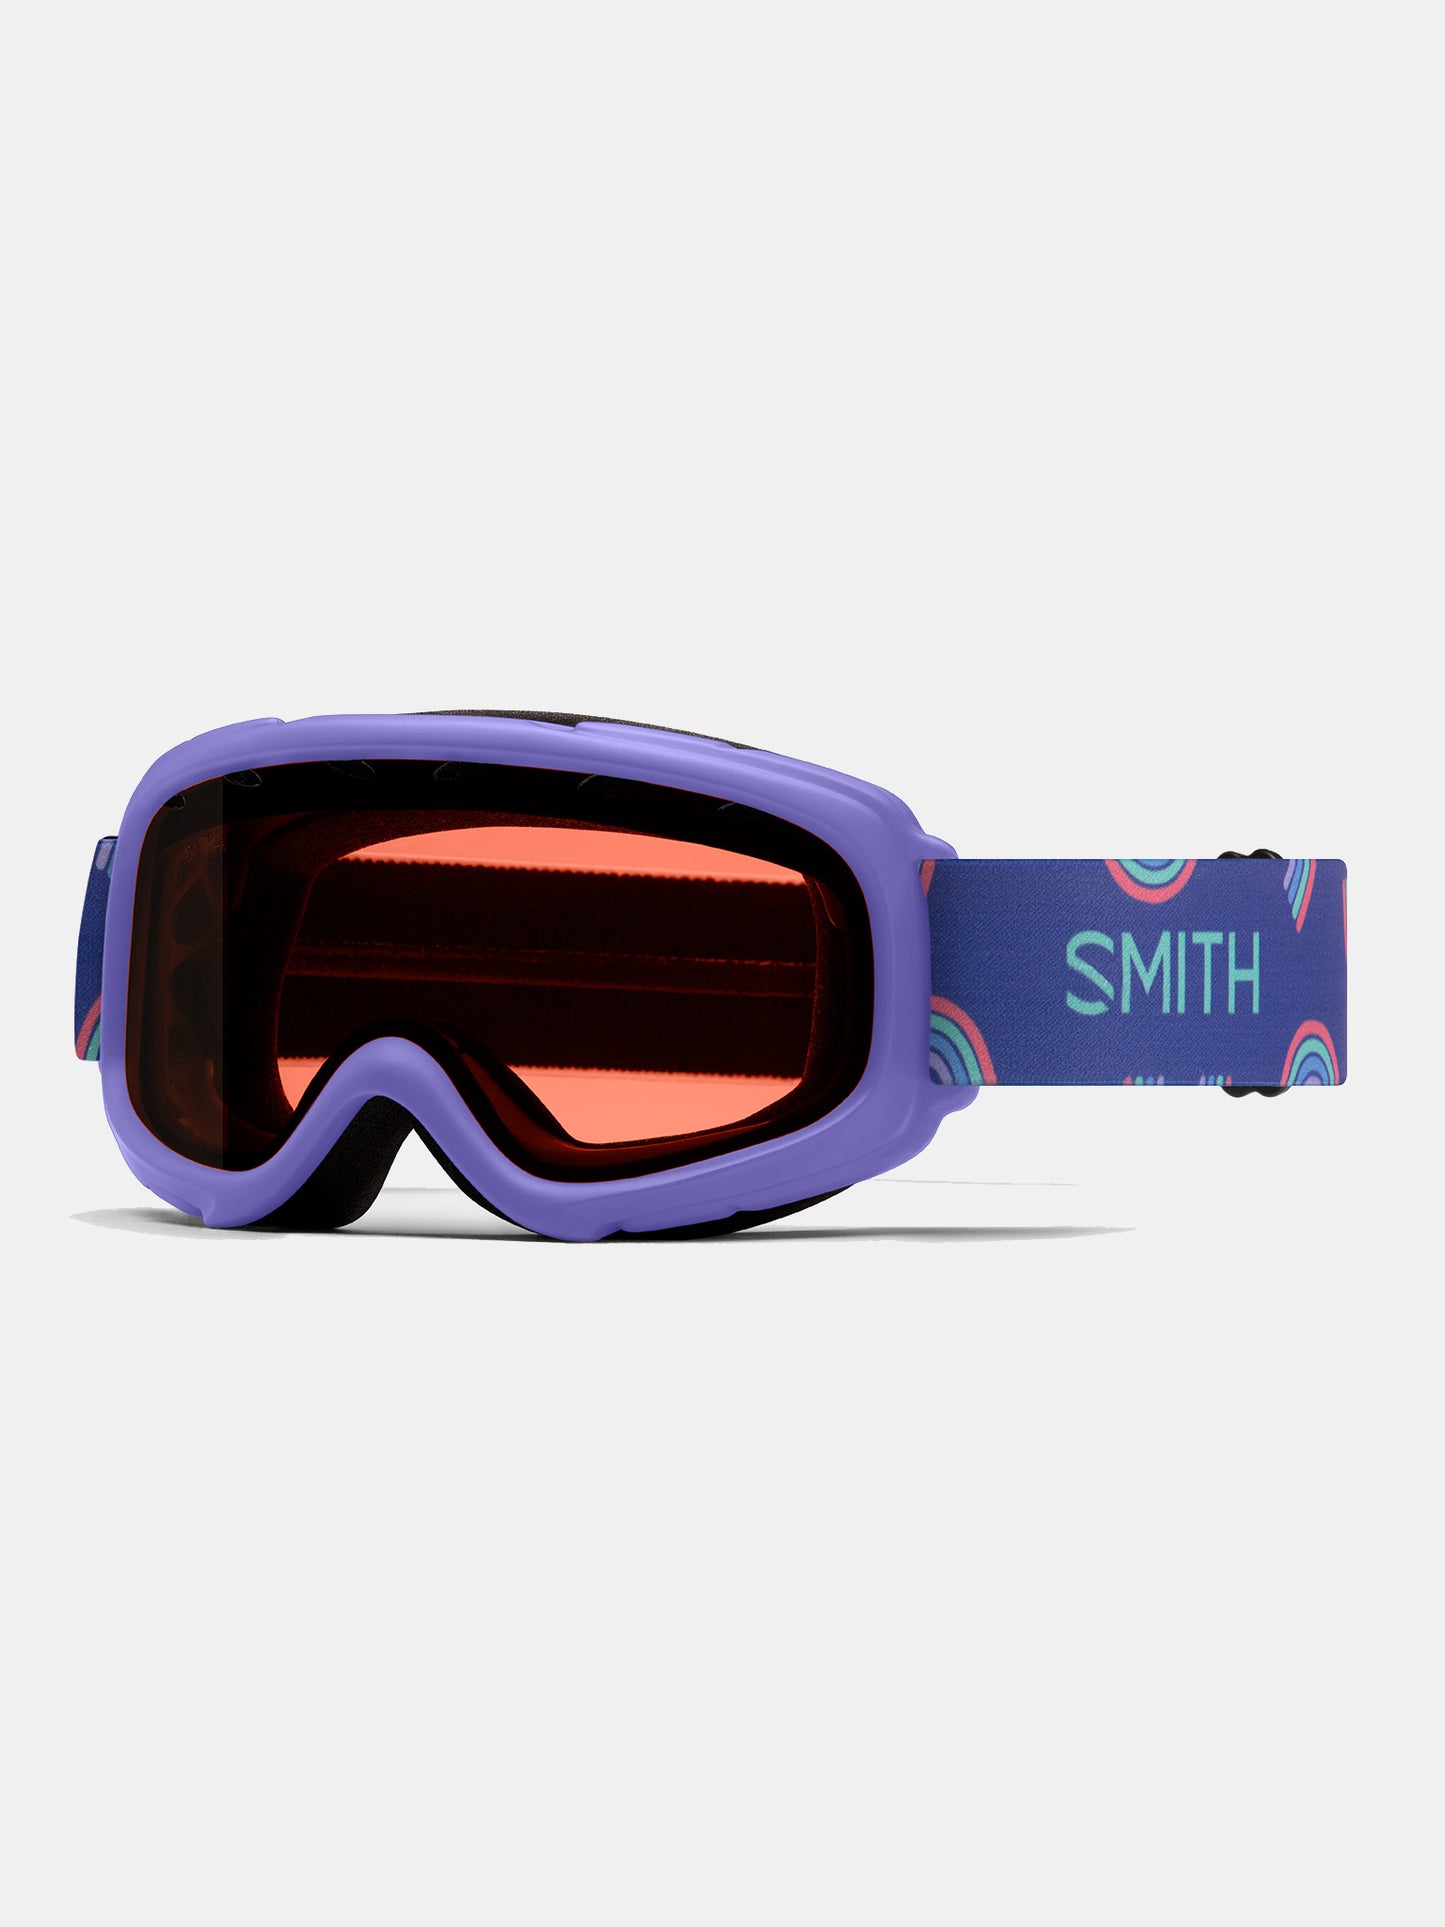 Smith Girls' Gambler Air Goggles